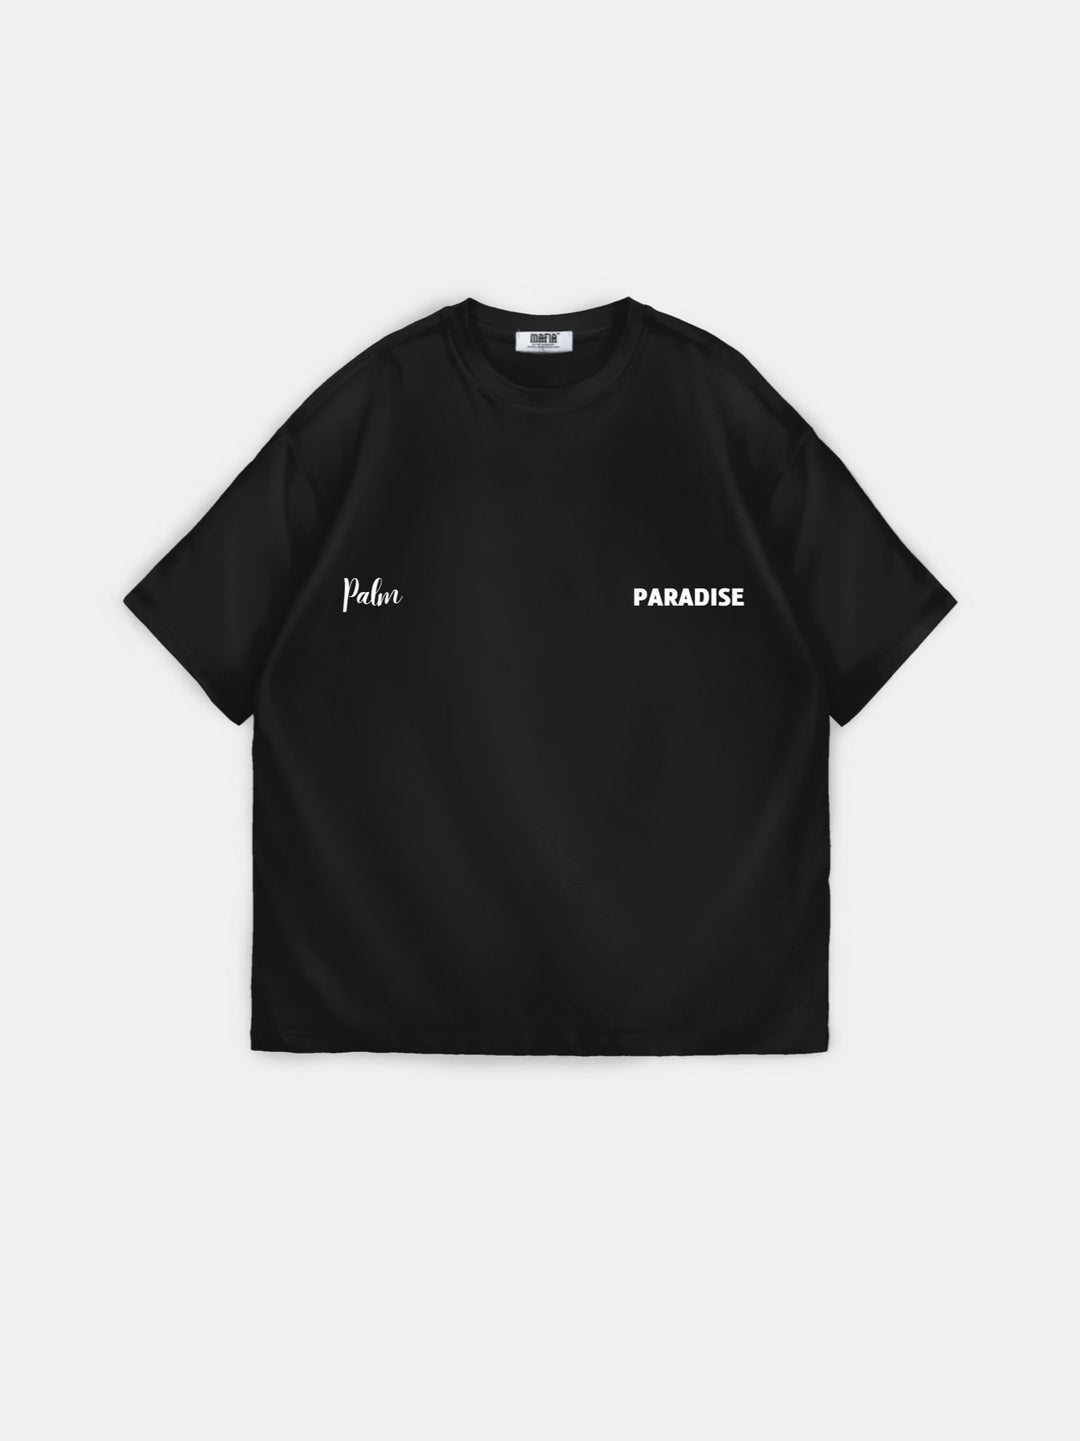 Oversize Palm Paradise T-shirt - Black